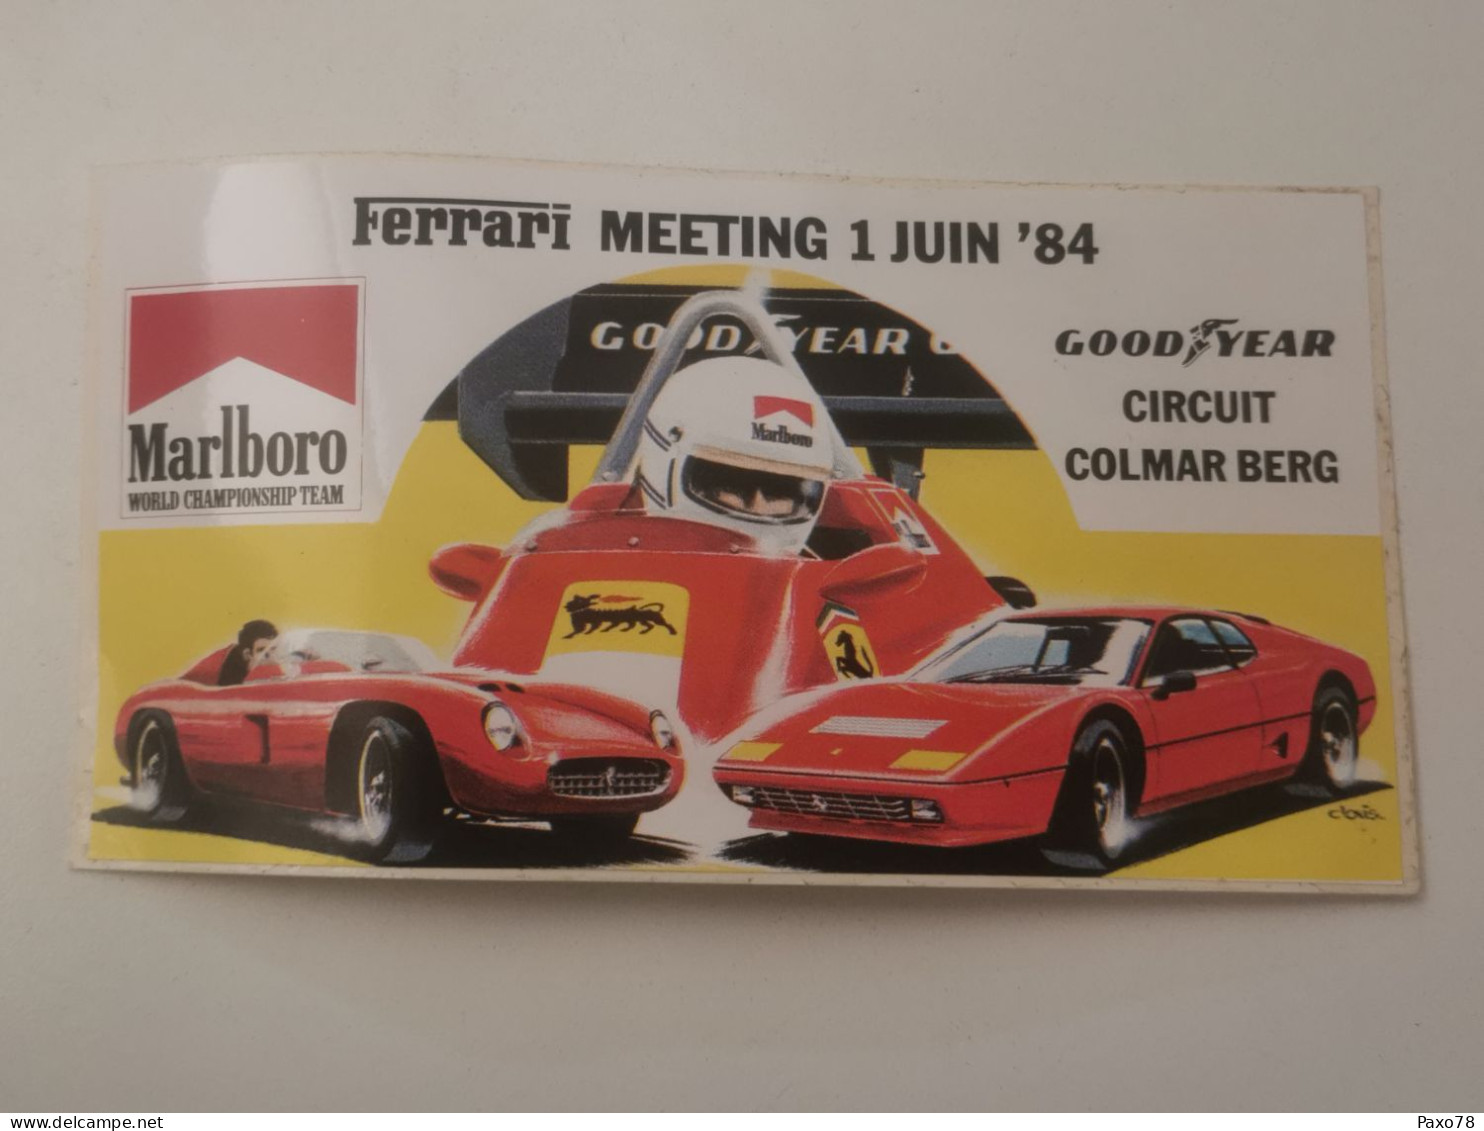 Autocollant Publicitaire, Ferrari Meeting, Circuit Colmar-berg Luxembourg 1984 - Aufkleber